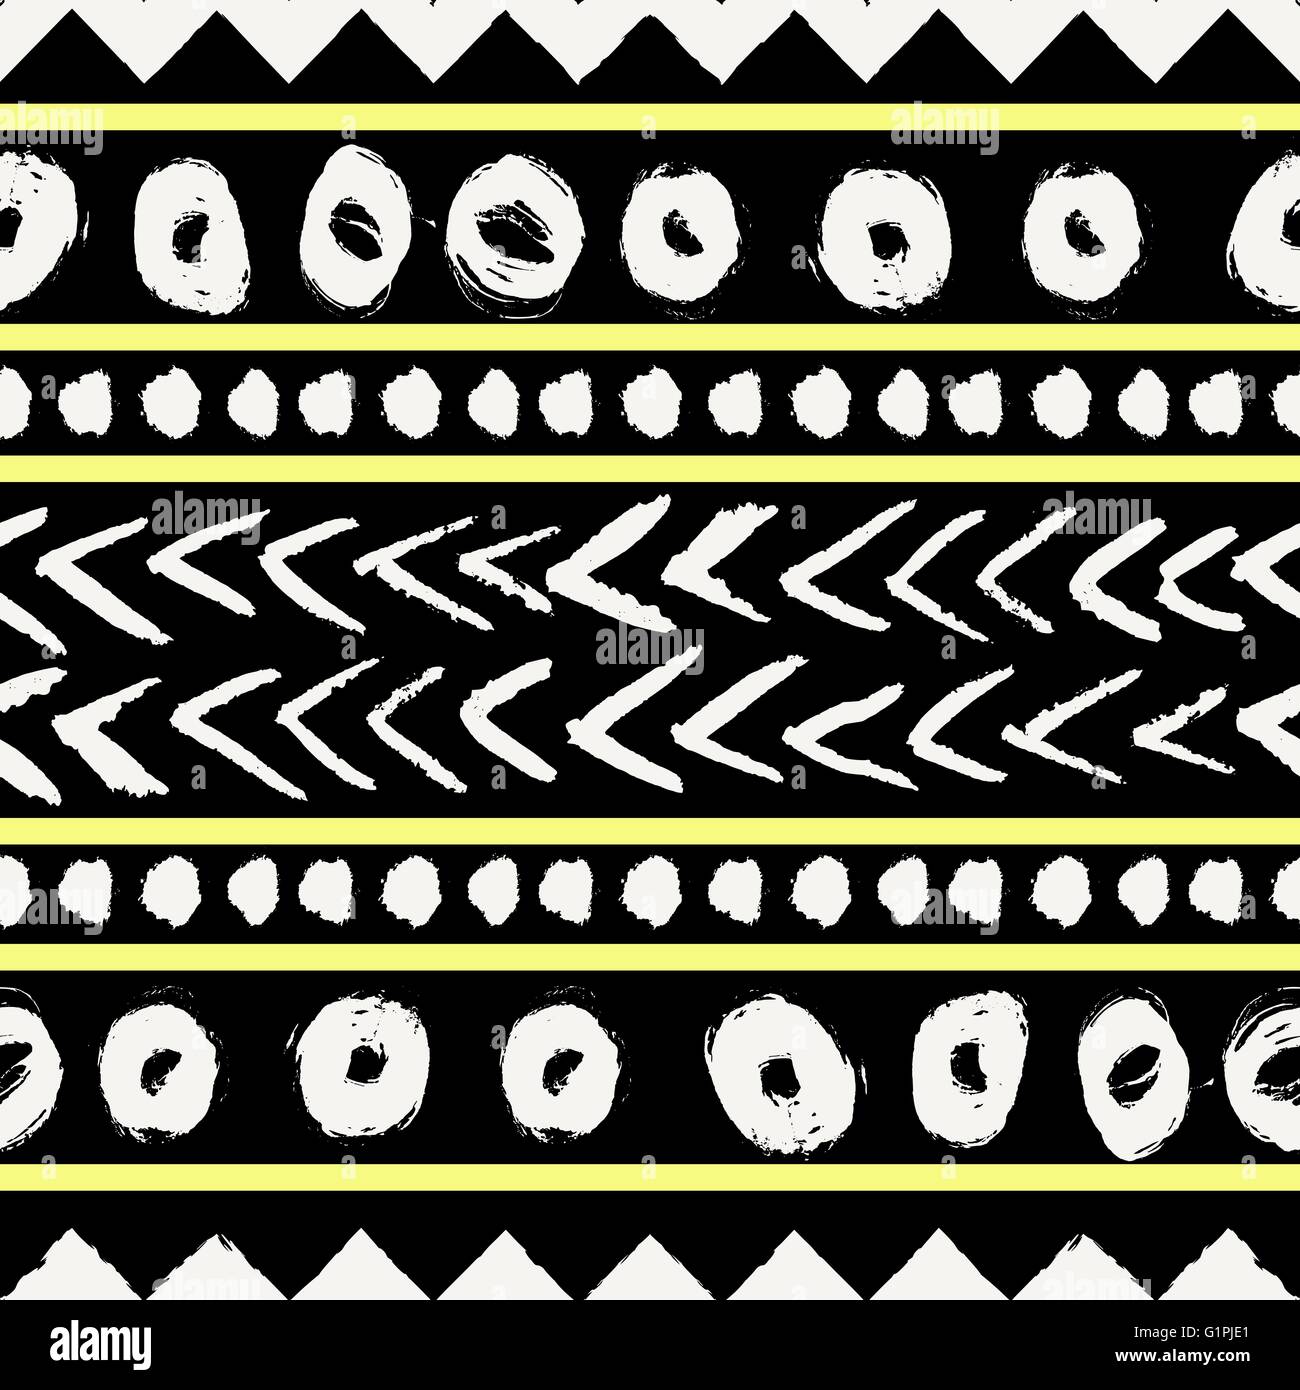 neon tribal patterns